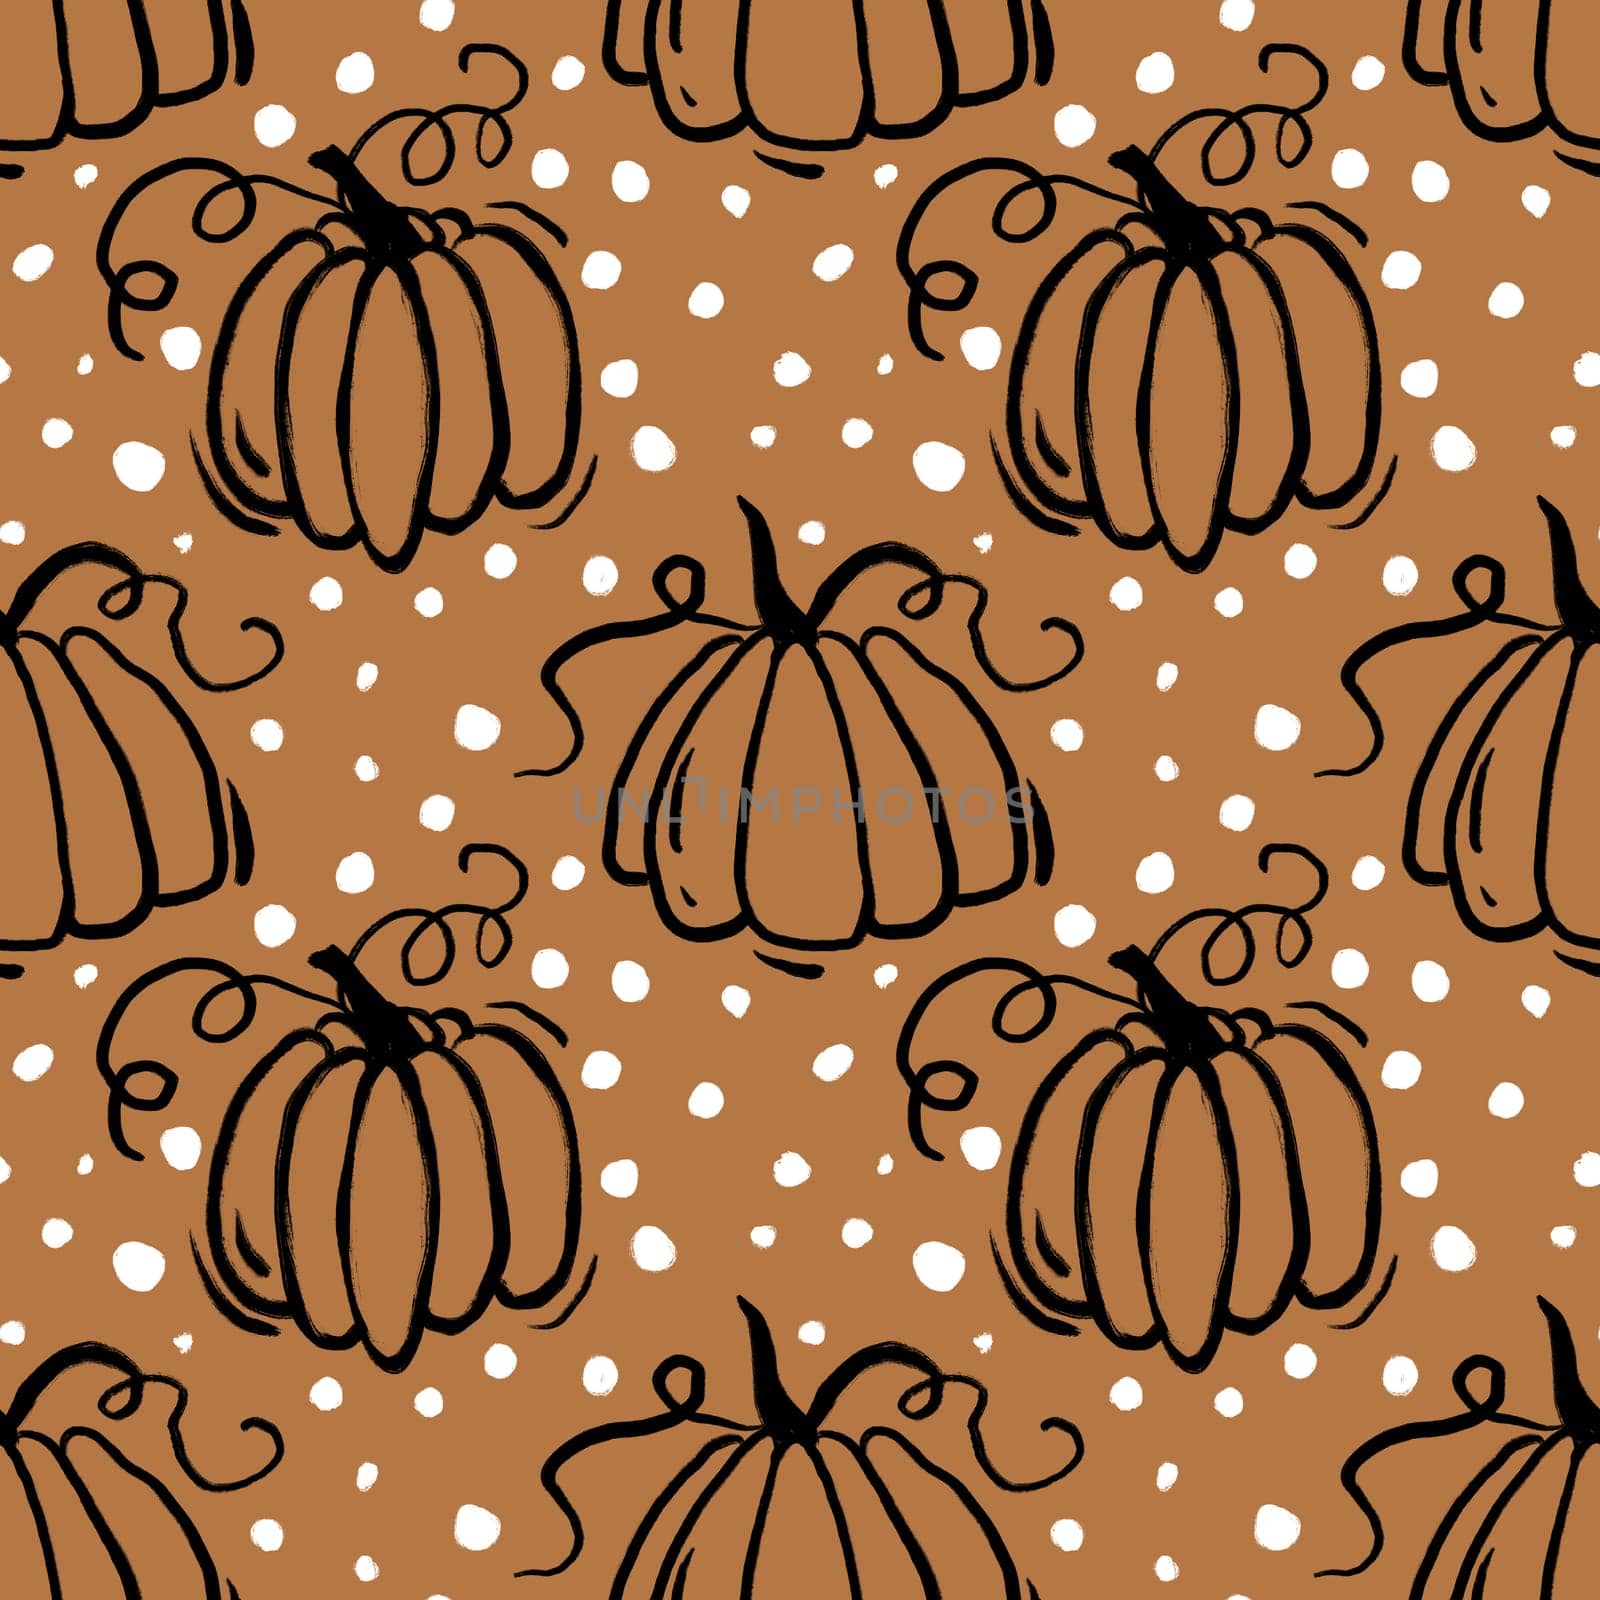 seamless hand drawn pattern on orange brown beige polka dot background ripe organic pumpkin squashes. For halloween thanksgiving design paper textile harvest celebration fall autumn season. by Lagmar